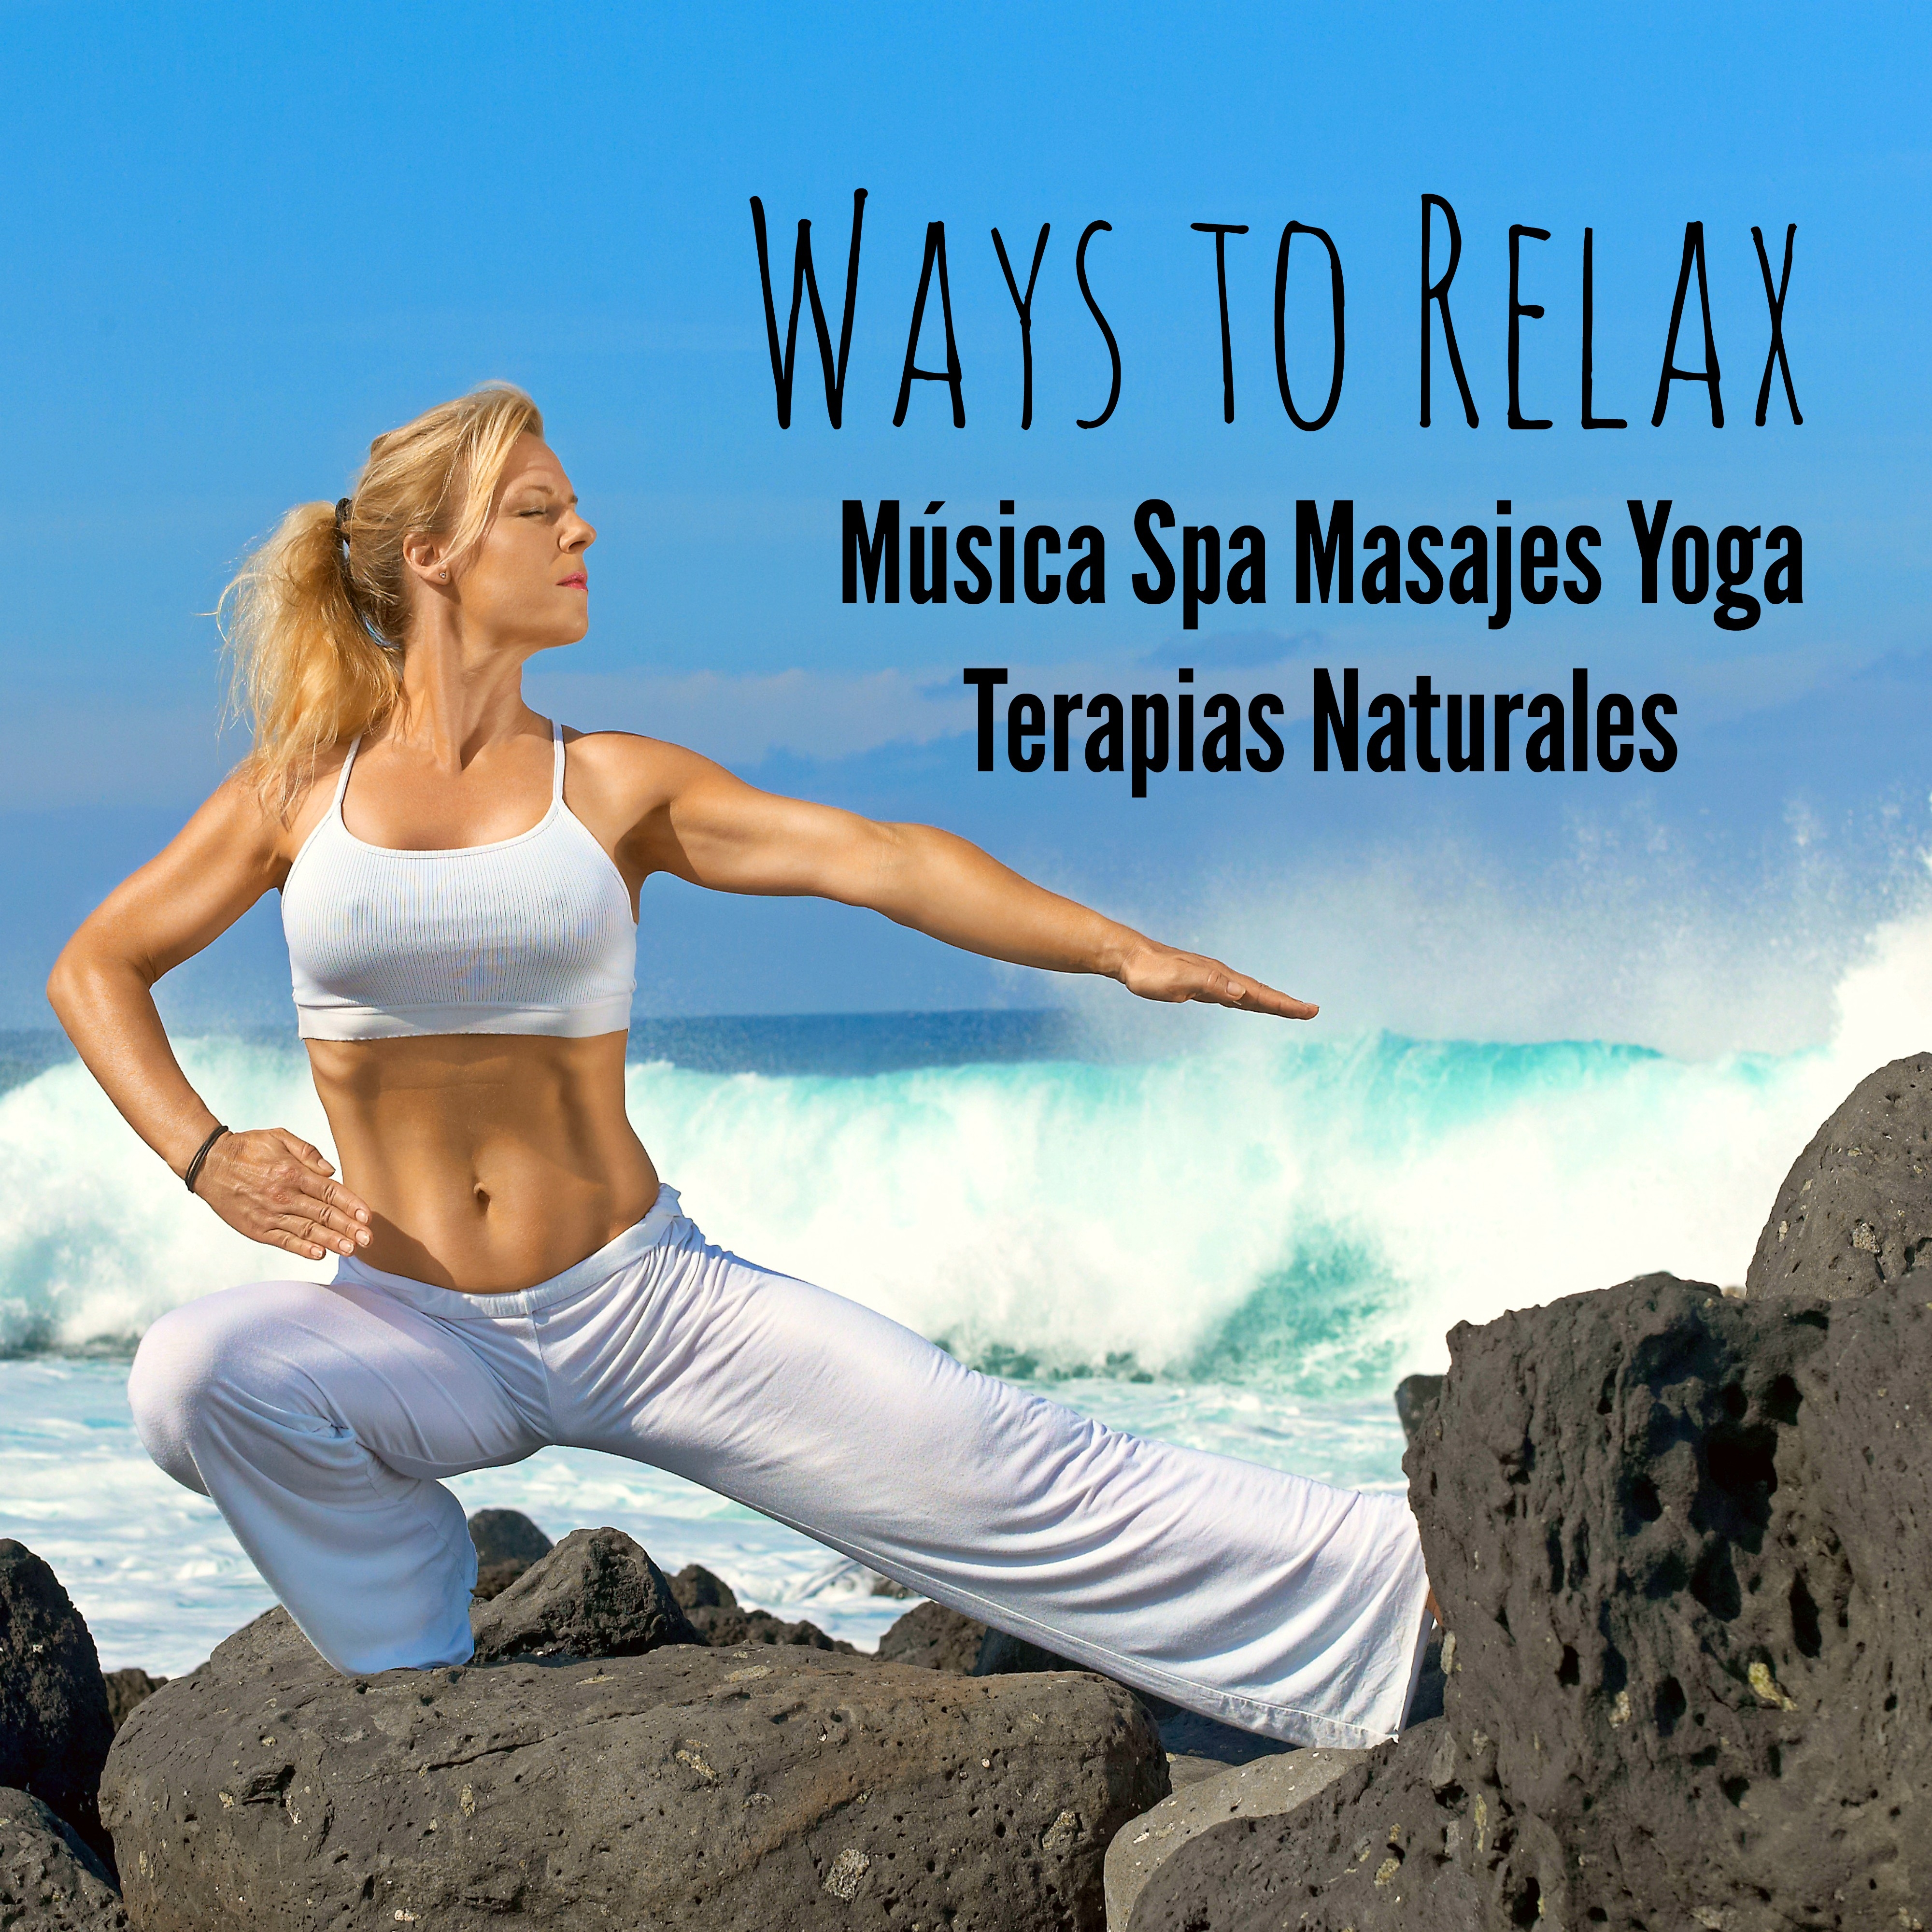 Ways to Relax  Mu sica Spa Masajes Yoga Terapias Naturales con Sonidos Easy Listening Chill Instrumental Techno House